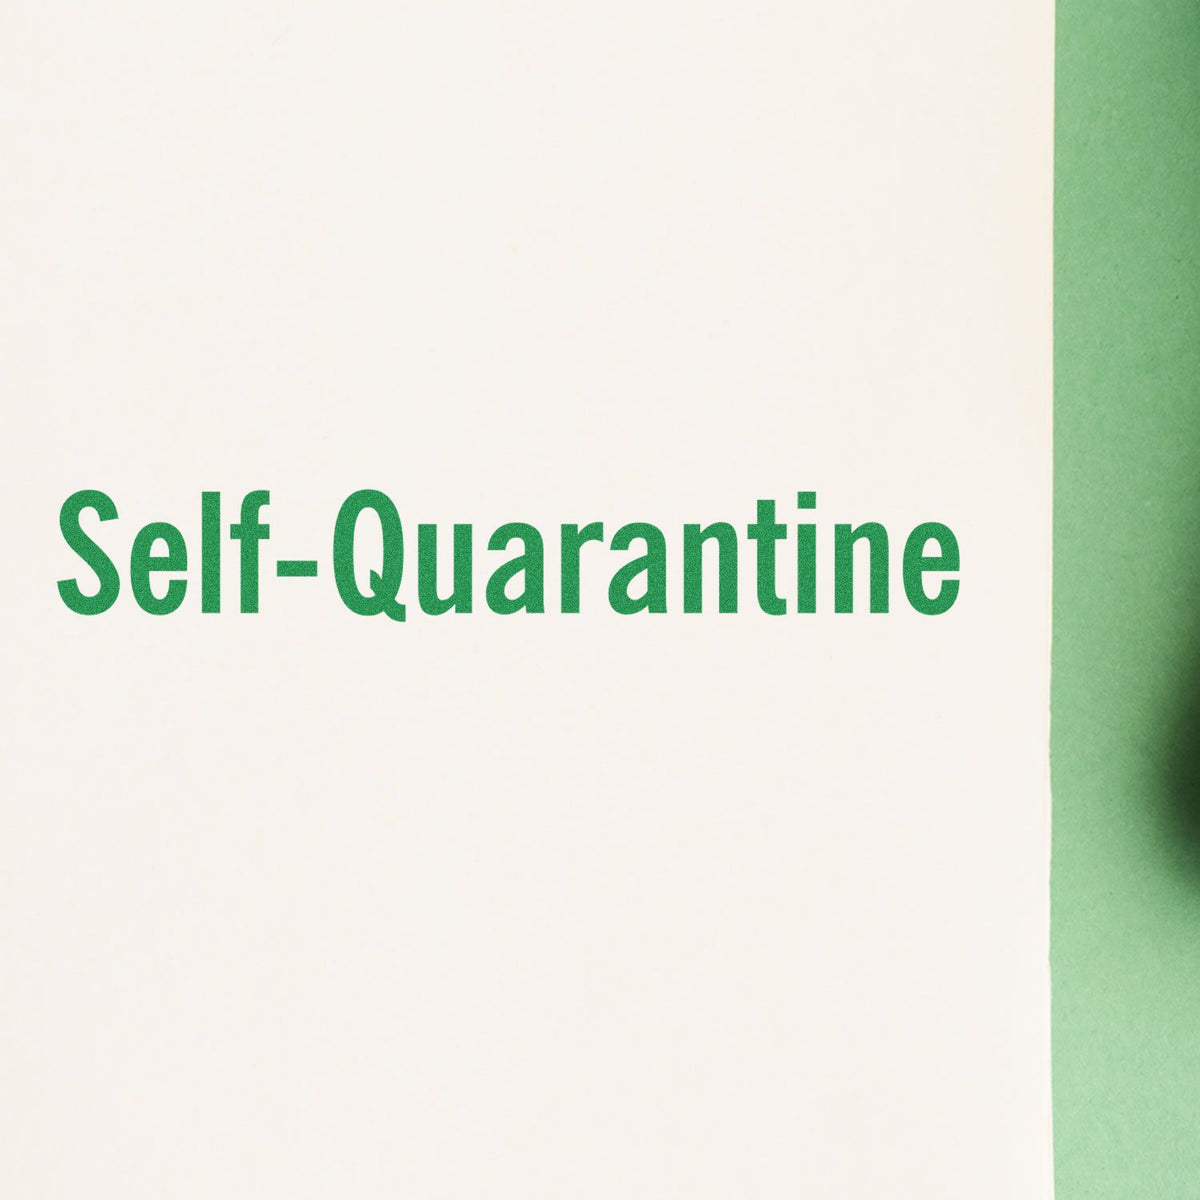 Self-Inking Self-Quarantine Stamp In Use